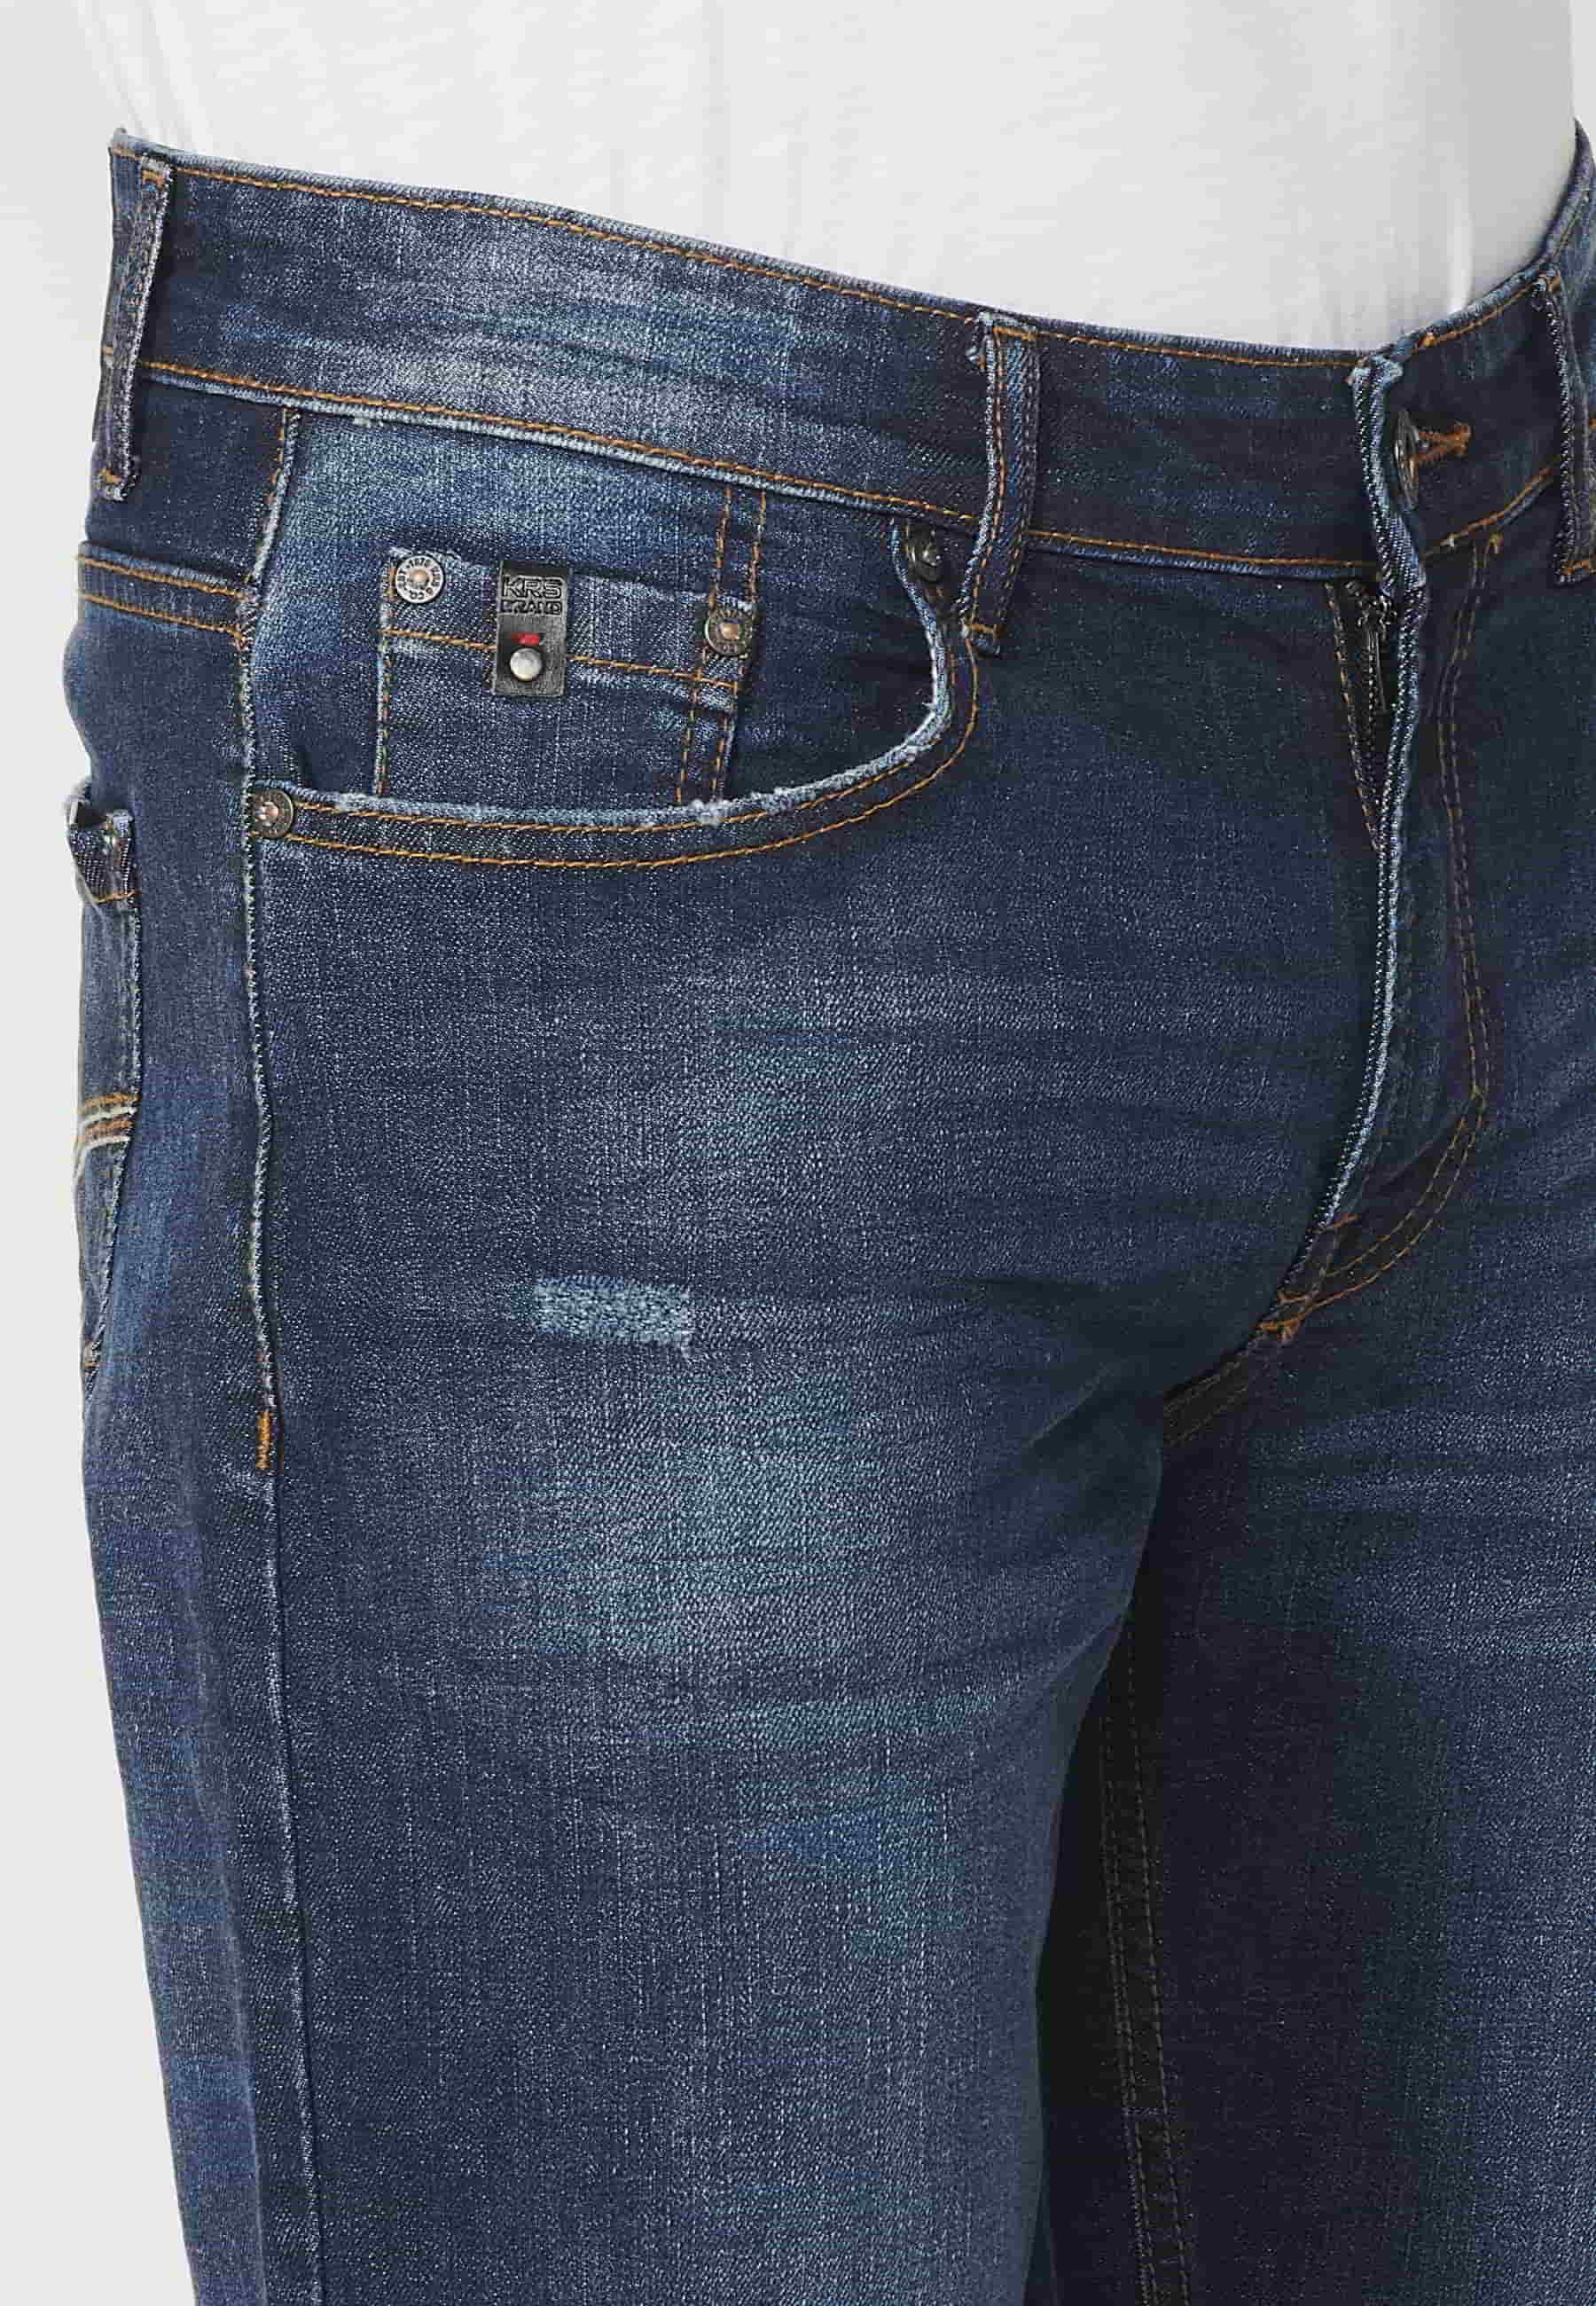 Pantalón largo jeans straigth regular fit, color Azul Medio, para hombres